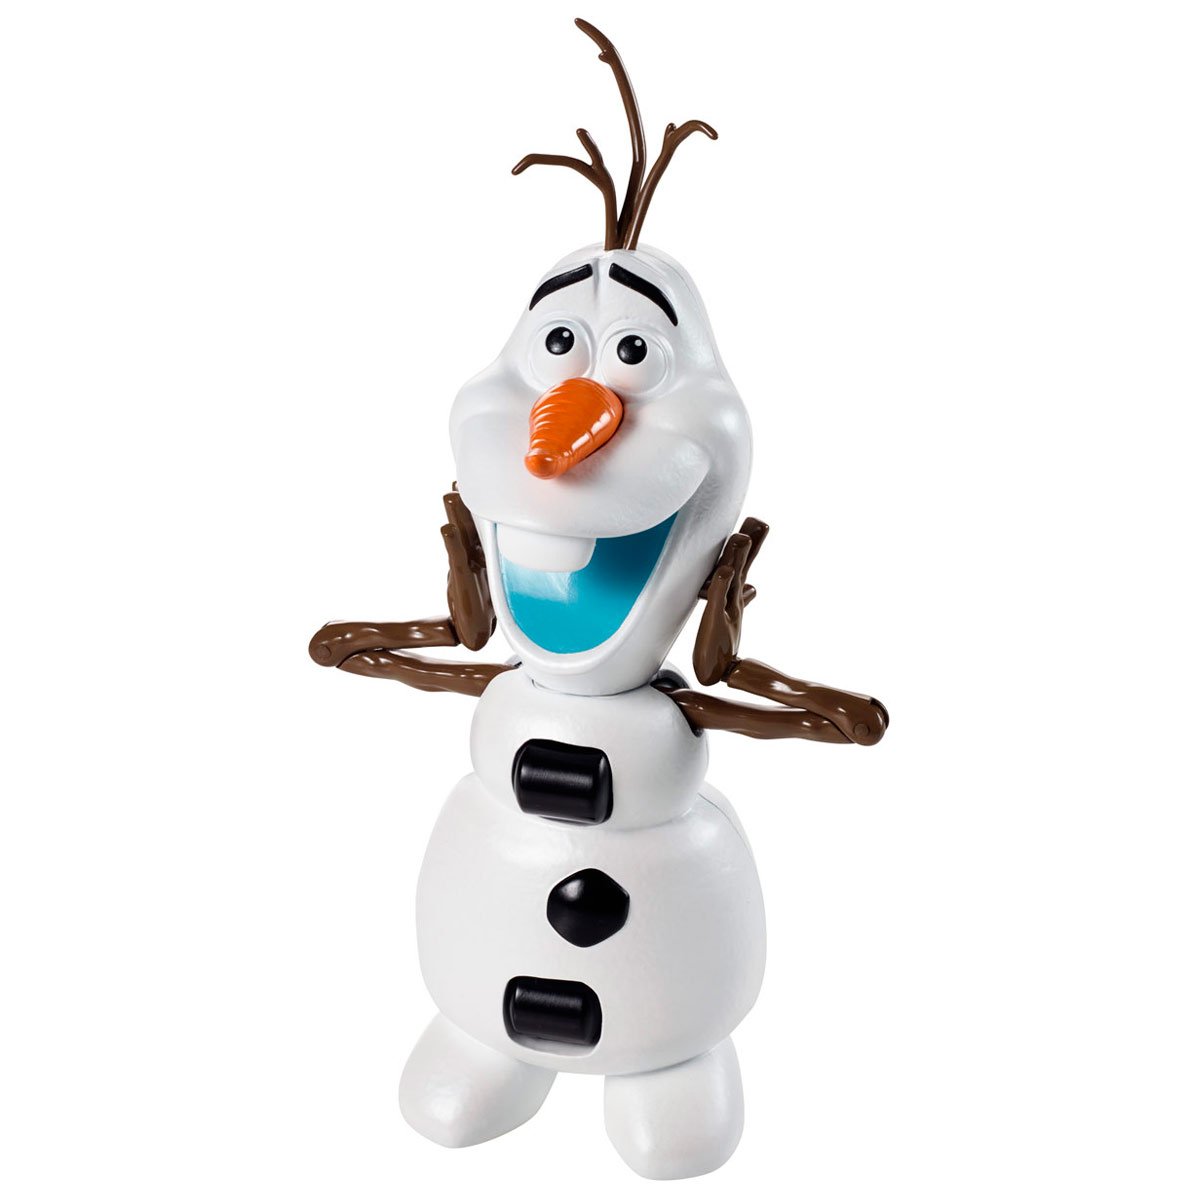 Disney Frozen Olaf Diversion en la Nieve